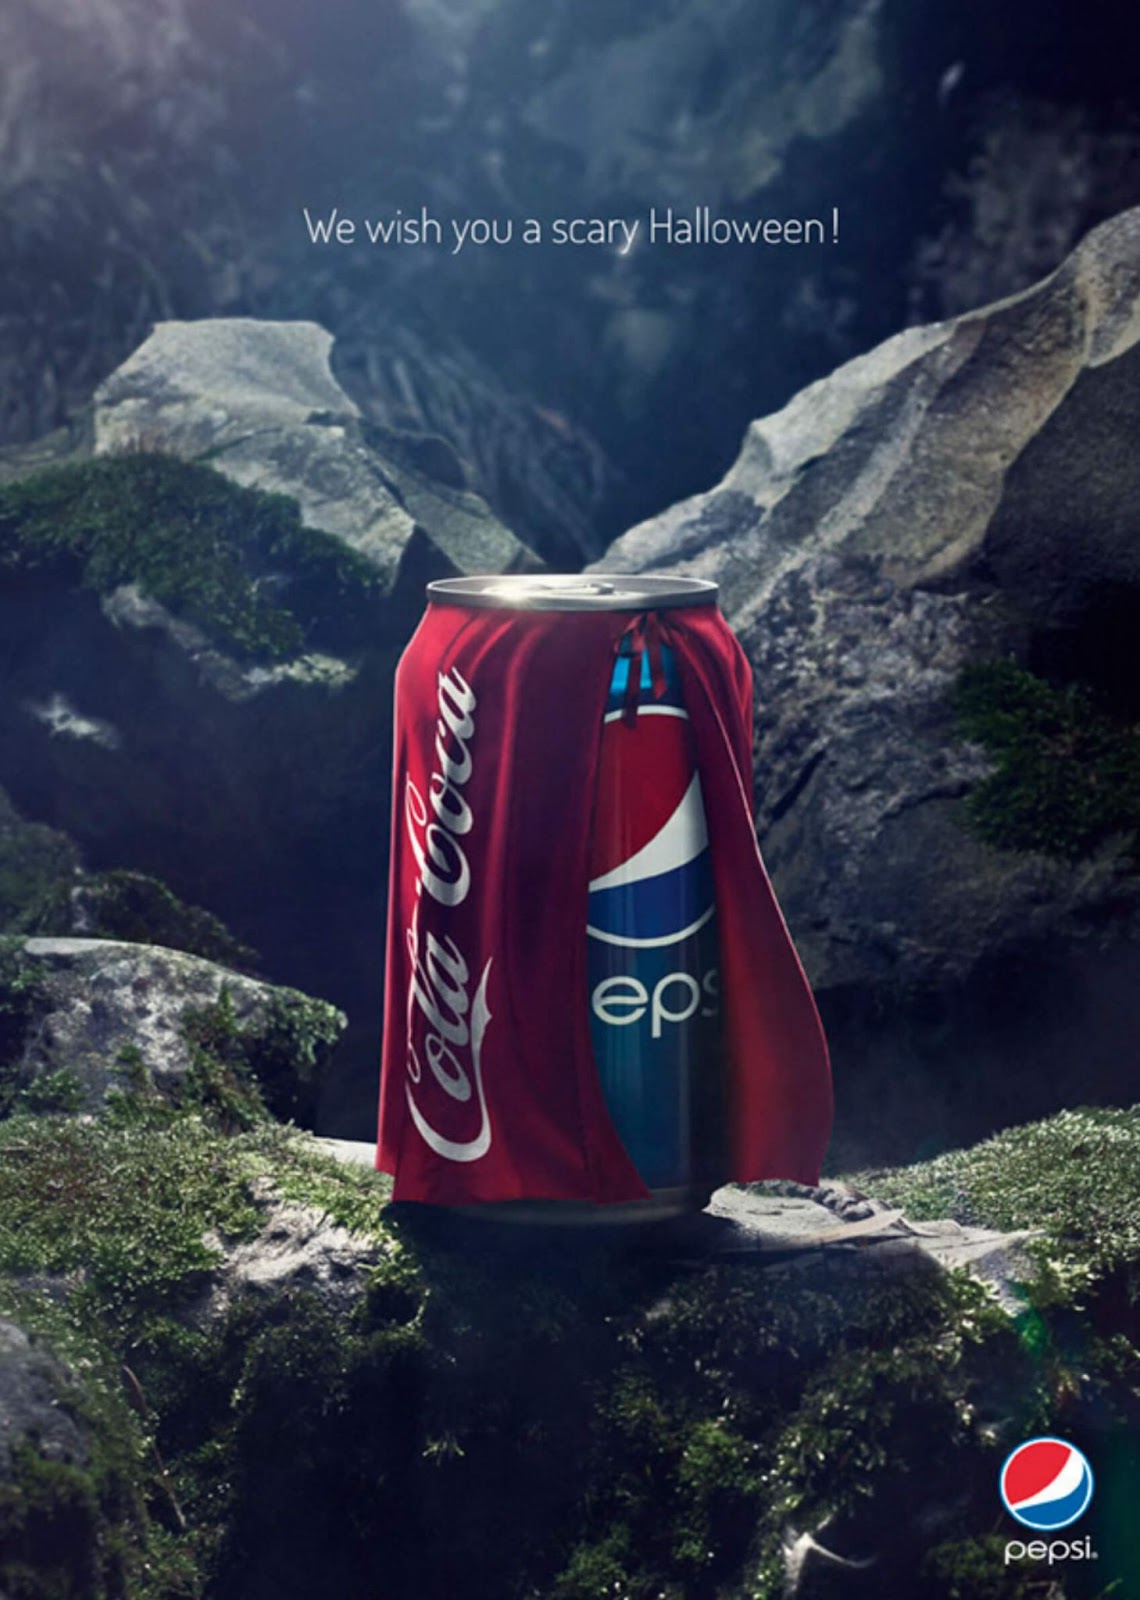 Halloween Pepsi ad